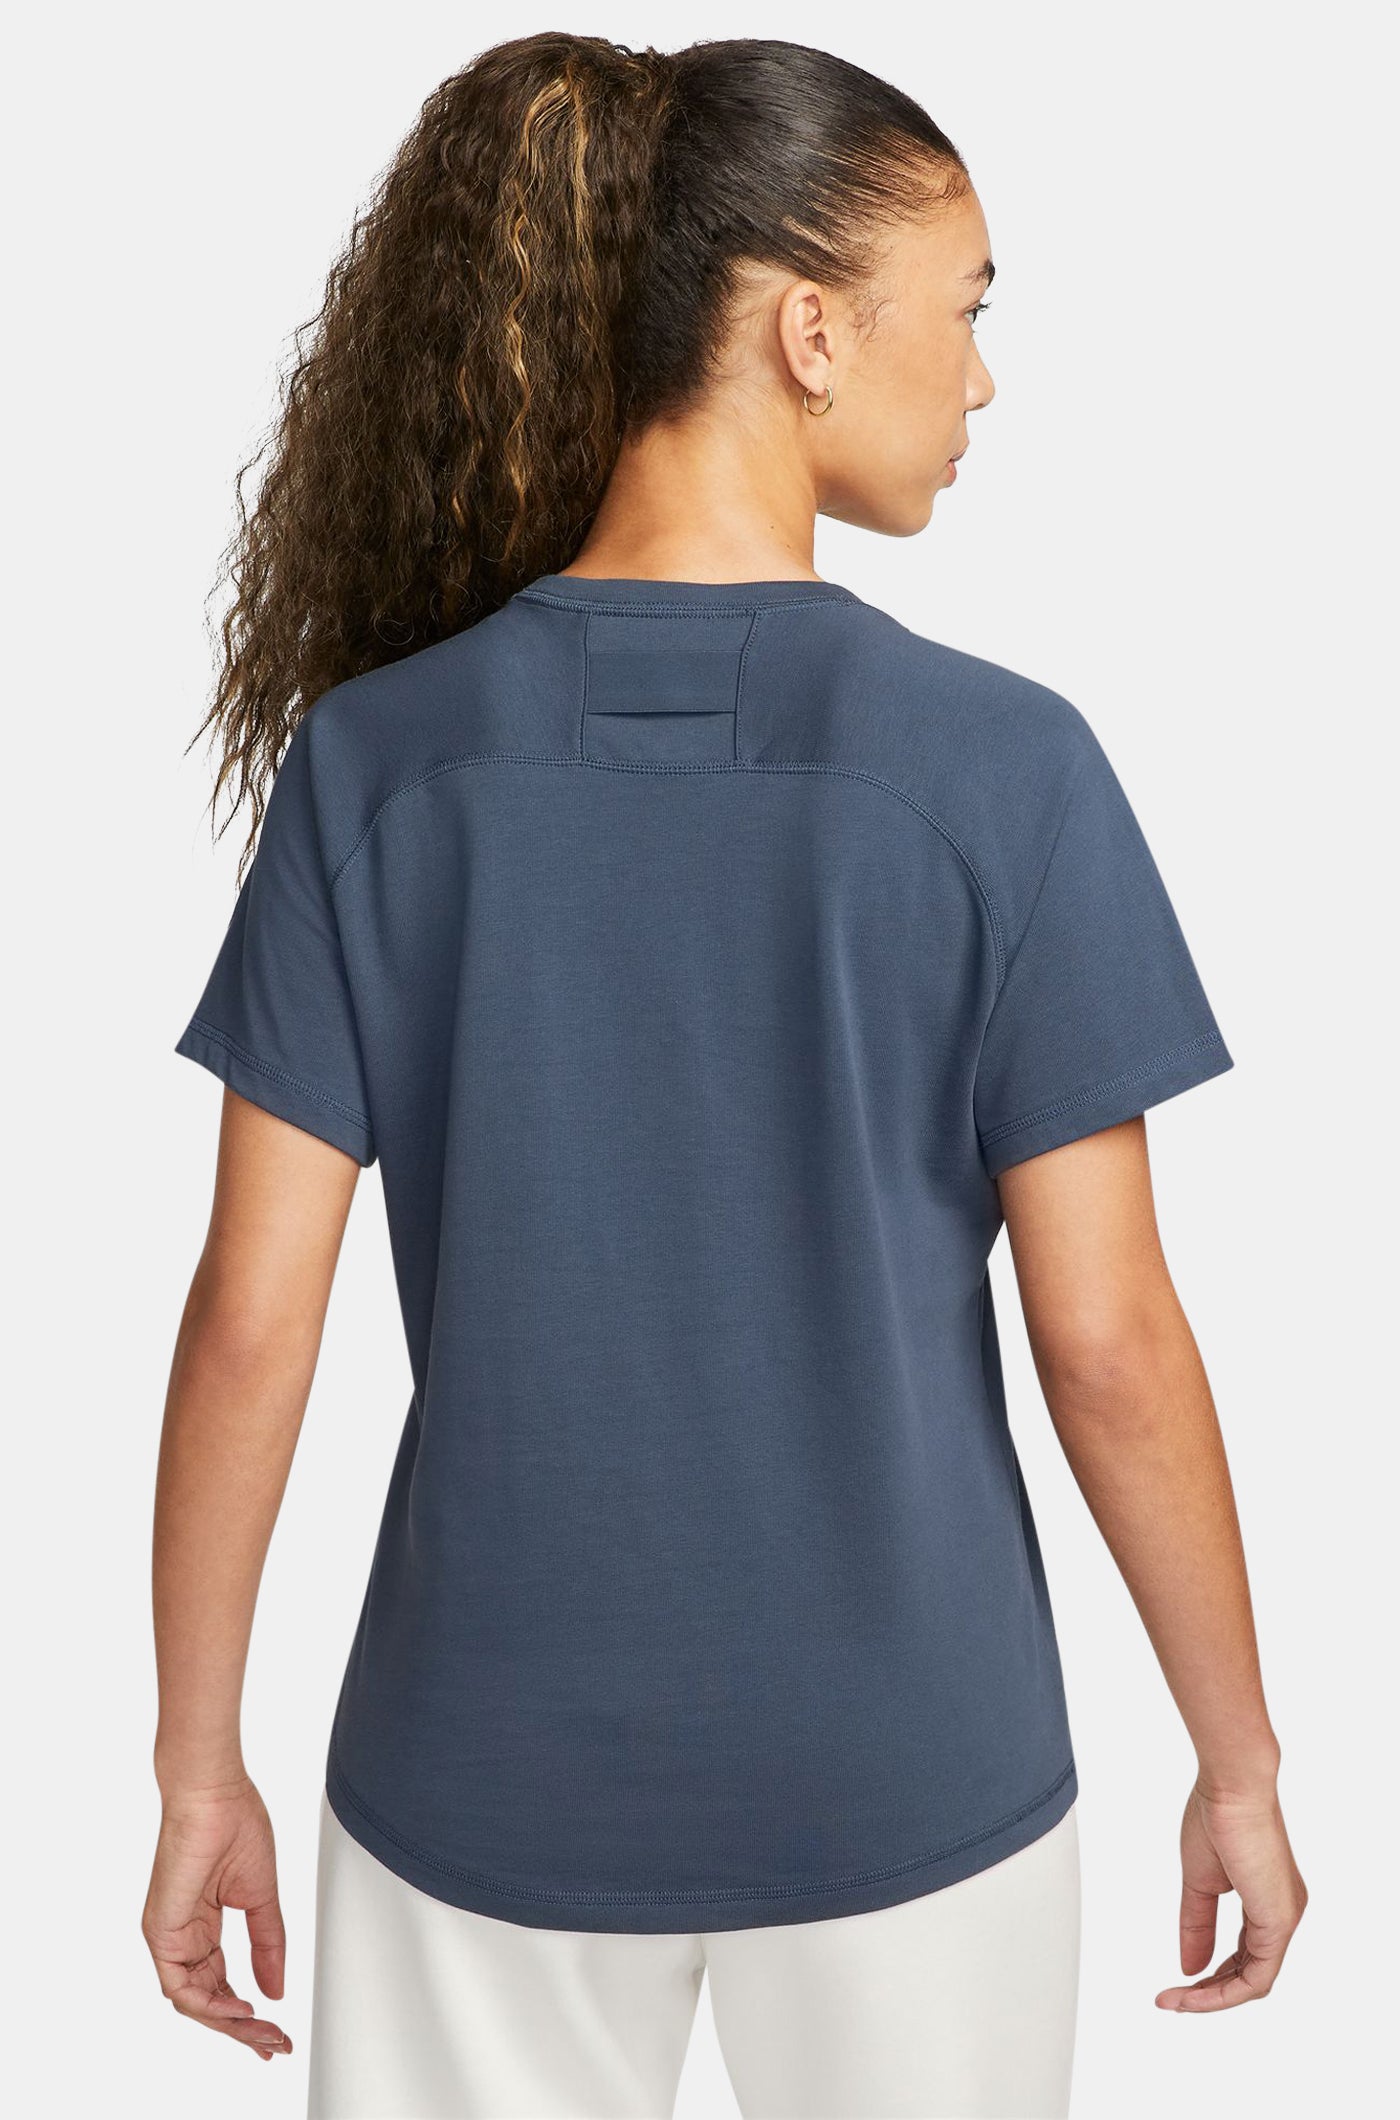 T-Shirt blue Barça Nike – Women – Barça Official Store Spotify Camp Nou